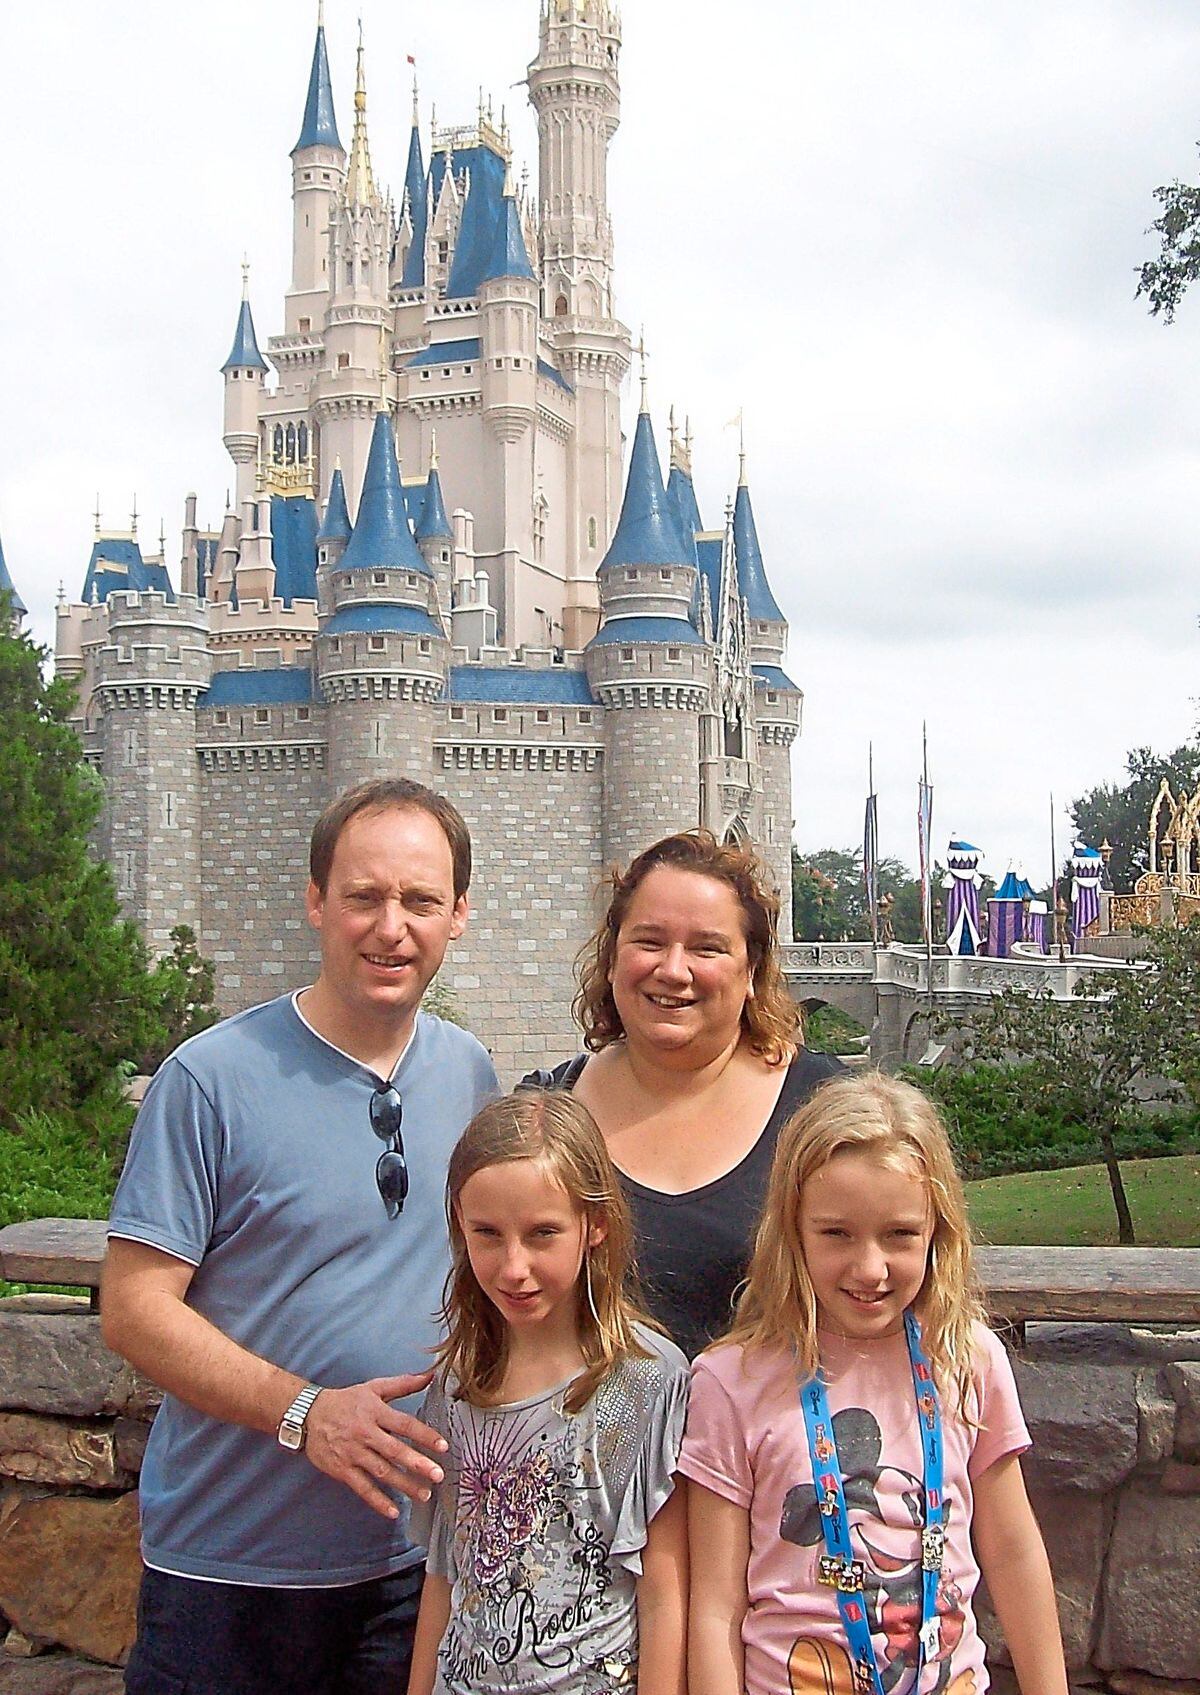 The family at Disney World